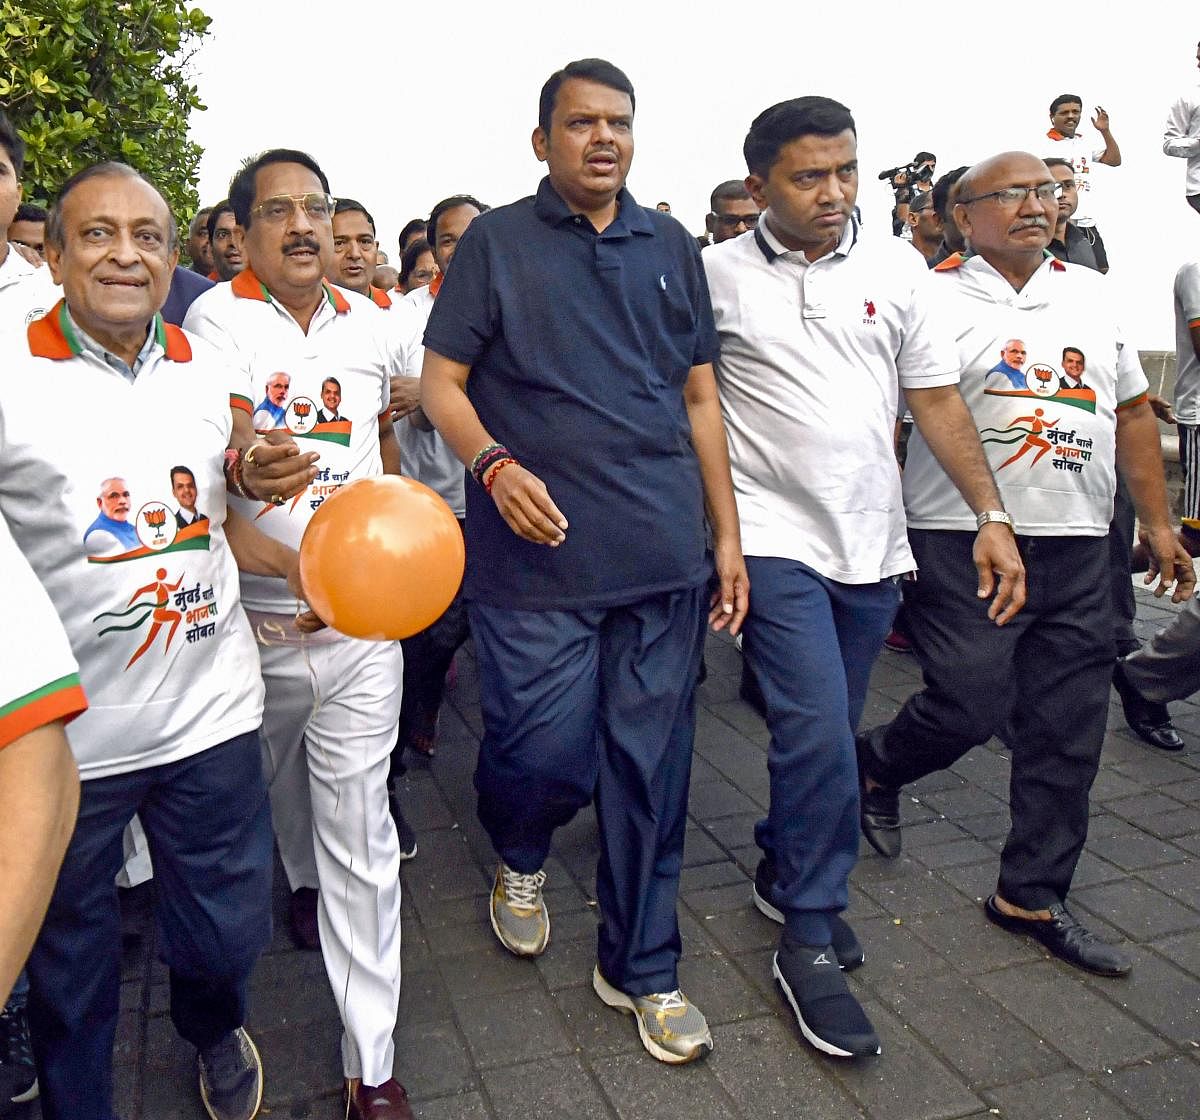 Maharashtra Chief Minister Devendra Fadnavis, Goa CM Pramod Sawant and other BJP leaders at the 'Mumbai Chalali BJP Sobat (Mumbai walks with BJP)' event in Mumbai, Sunday, Oct. 13, 2019. (PTI Photo) 